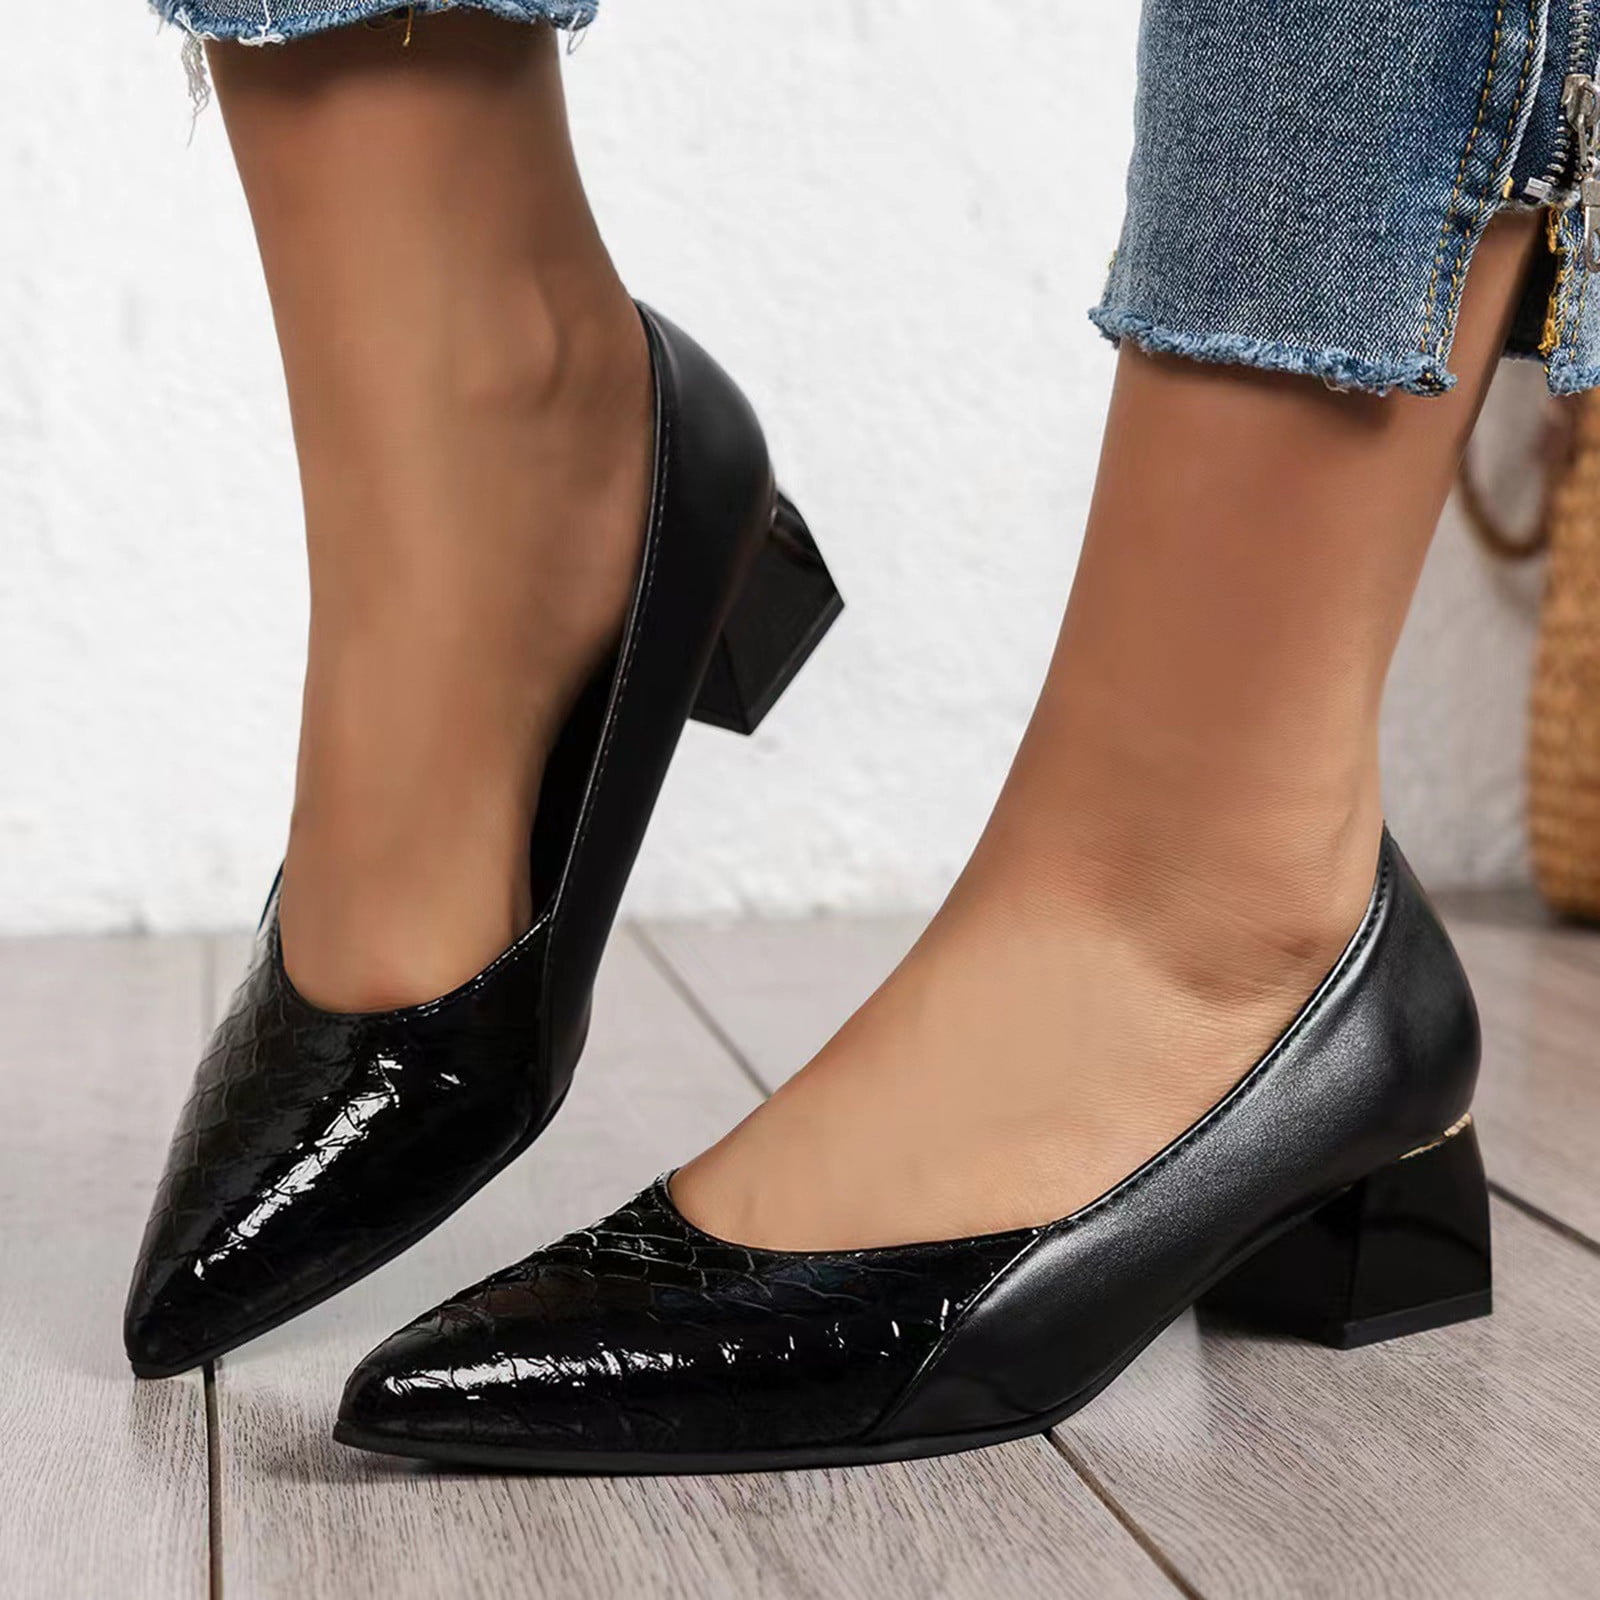 low heel dress shoes for women